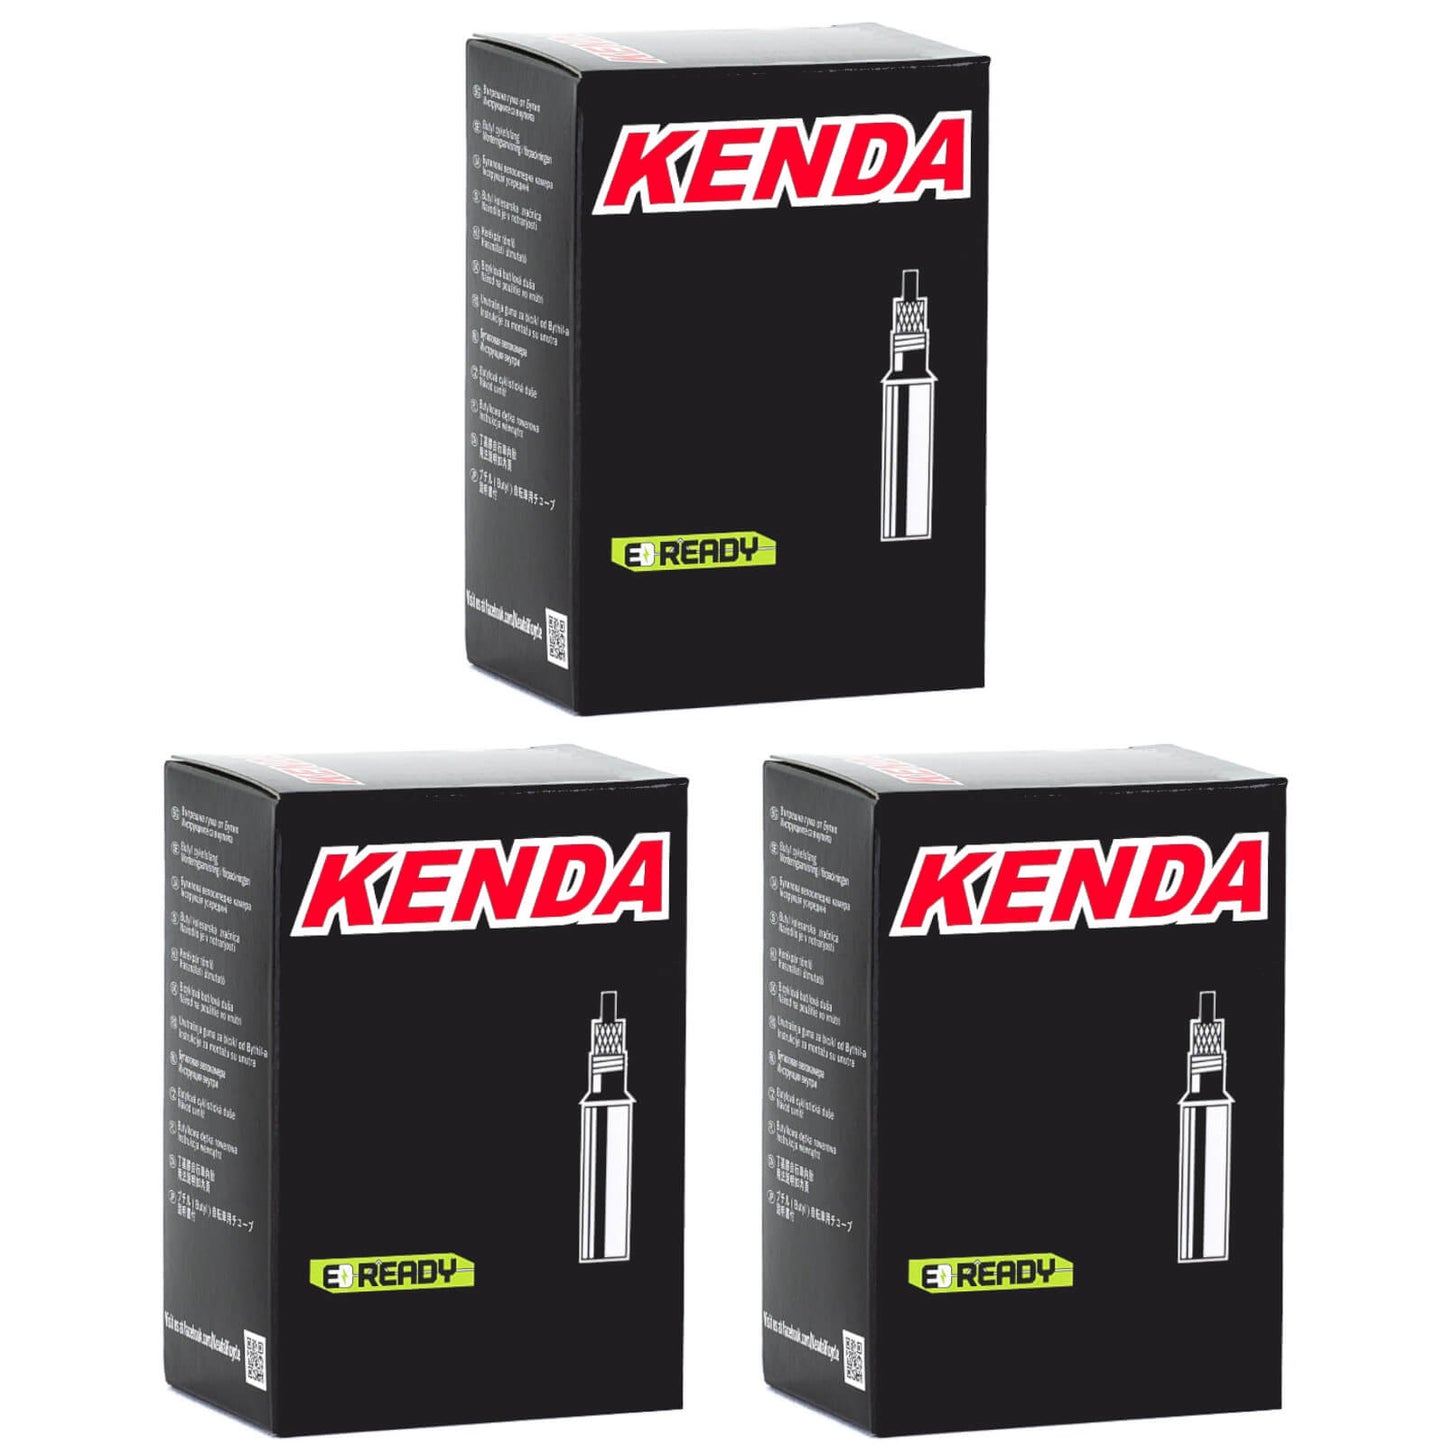 Kenda 26x2.75-3.0" 26 Inch Presta Valve Bike Inner Tube Pack of 3